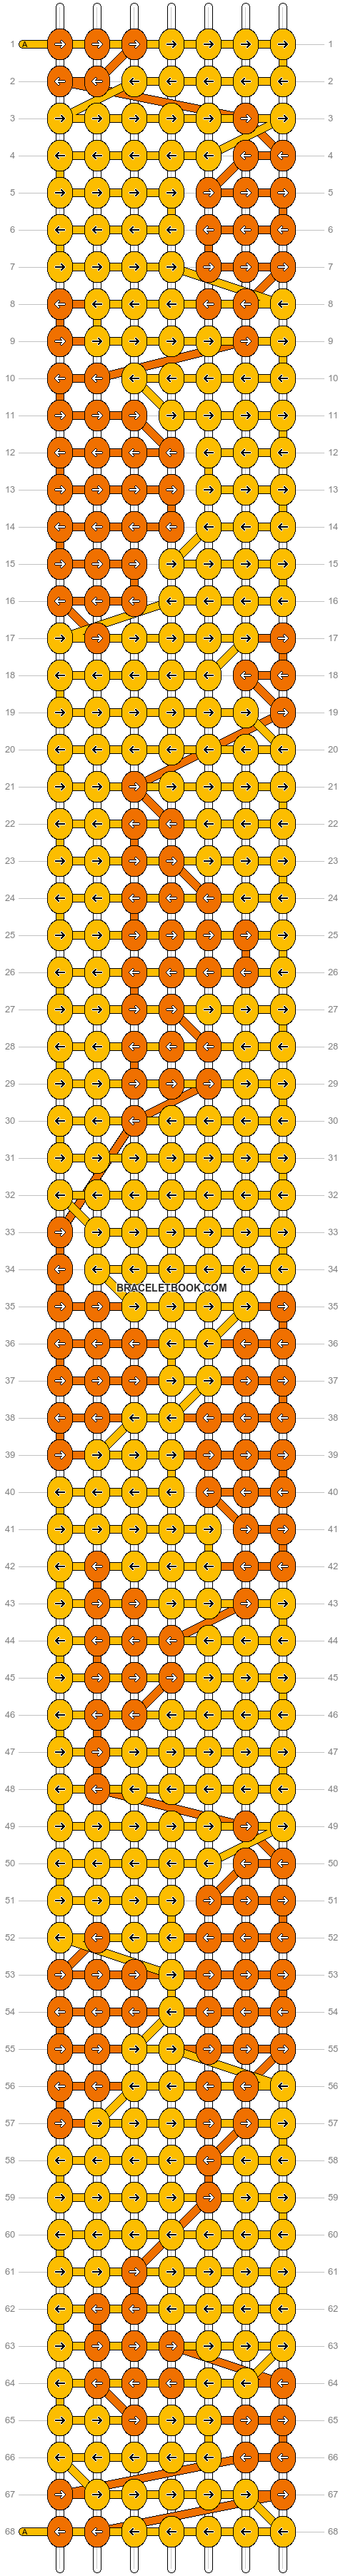 Alpha pattern #1654 variation #49046 pattern